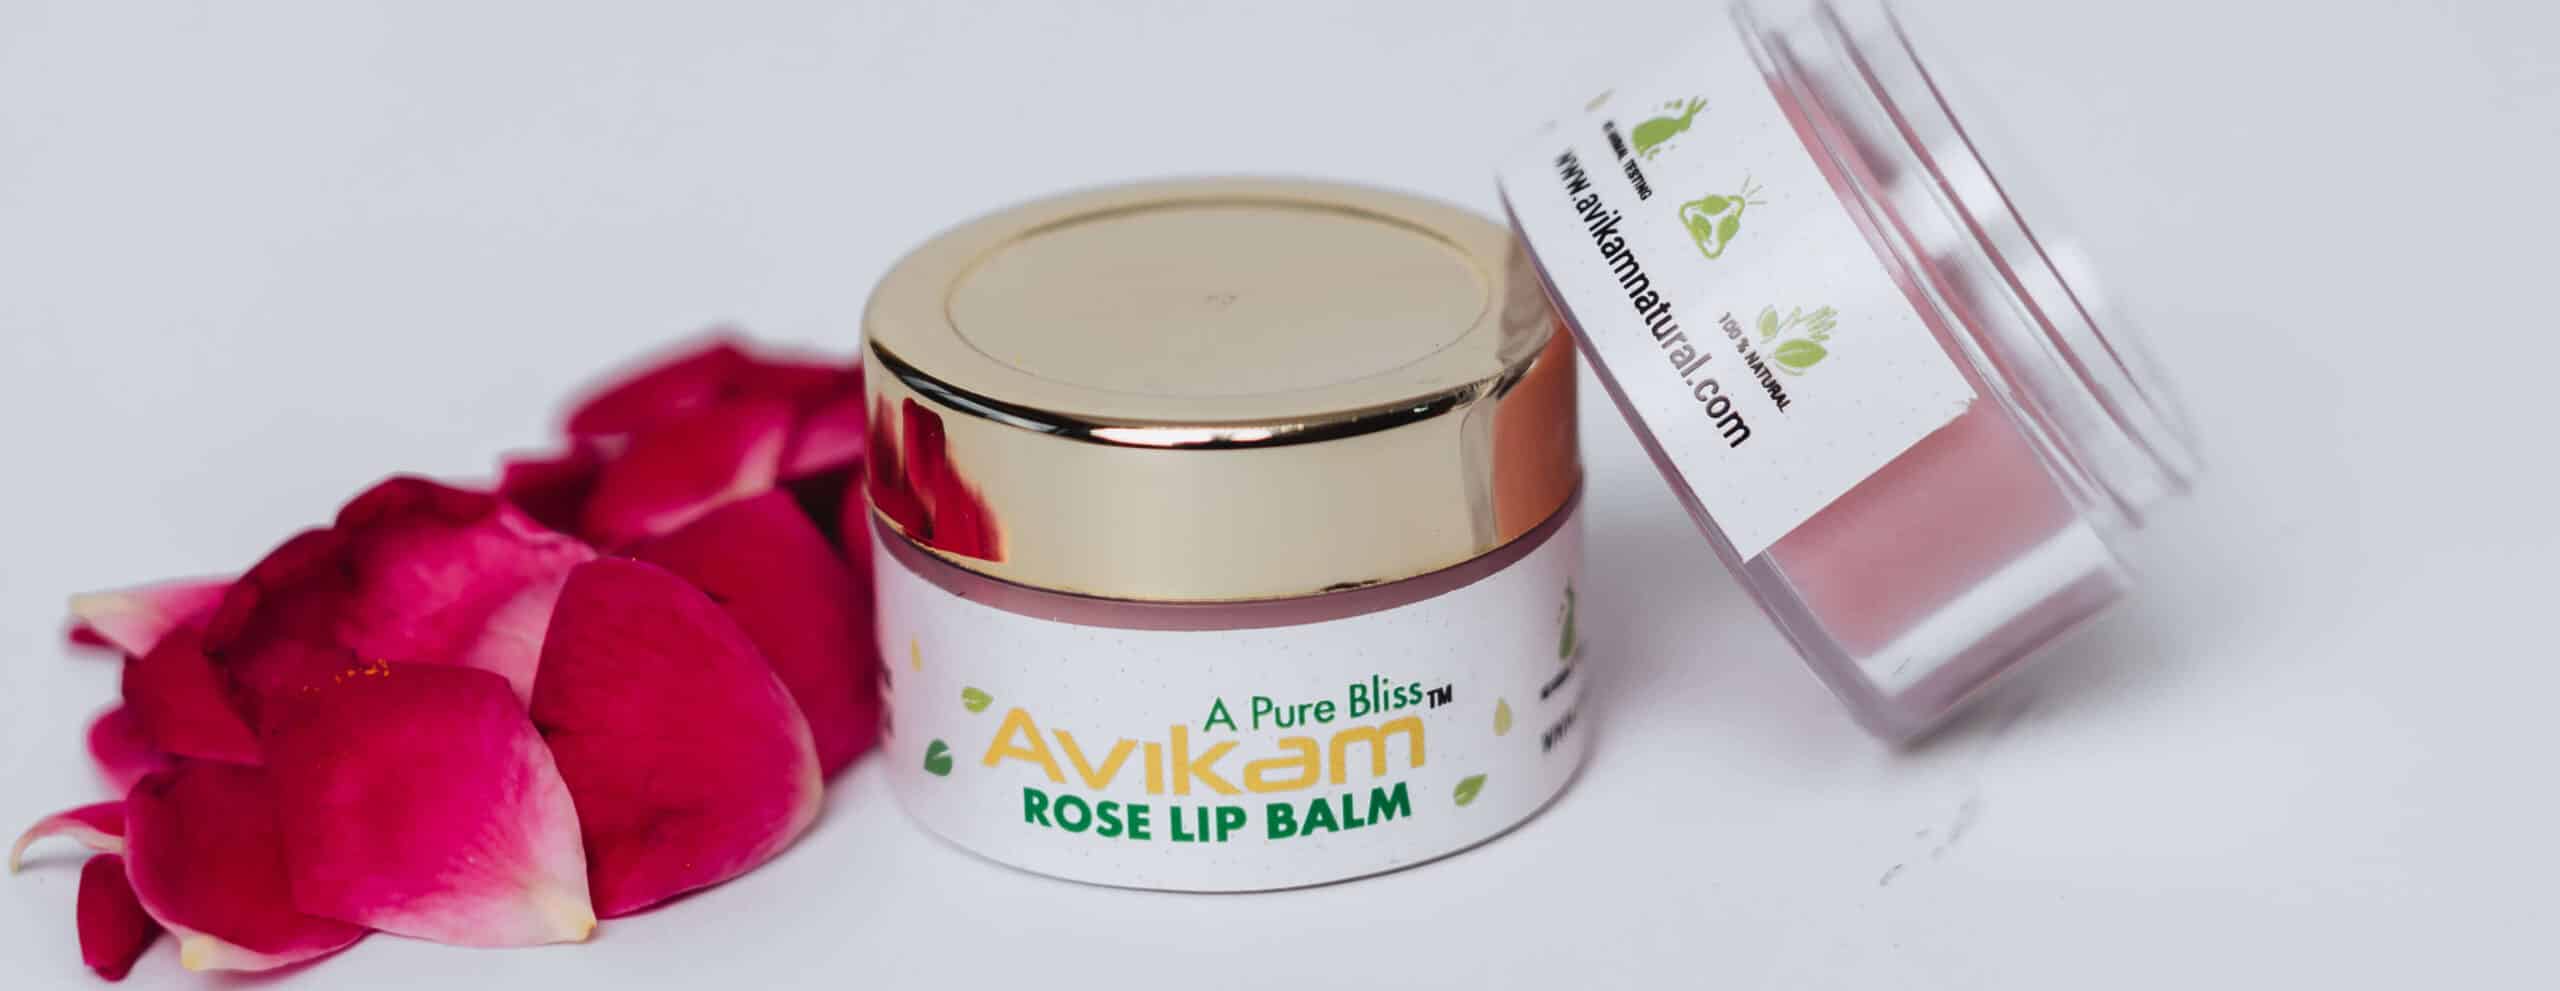 Rose Lip Balm1